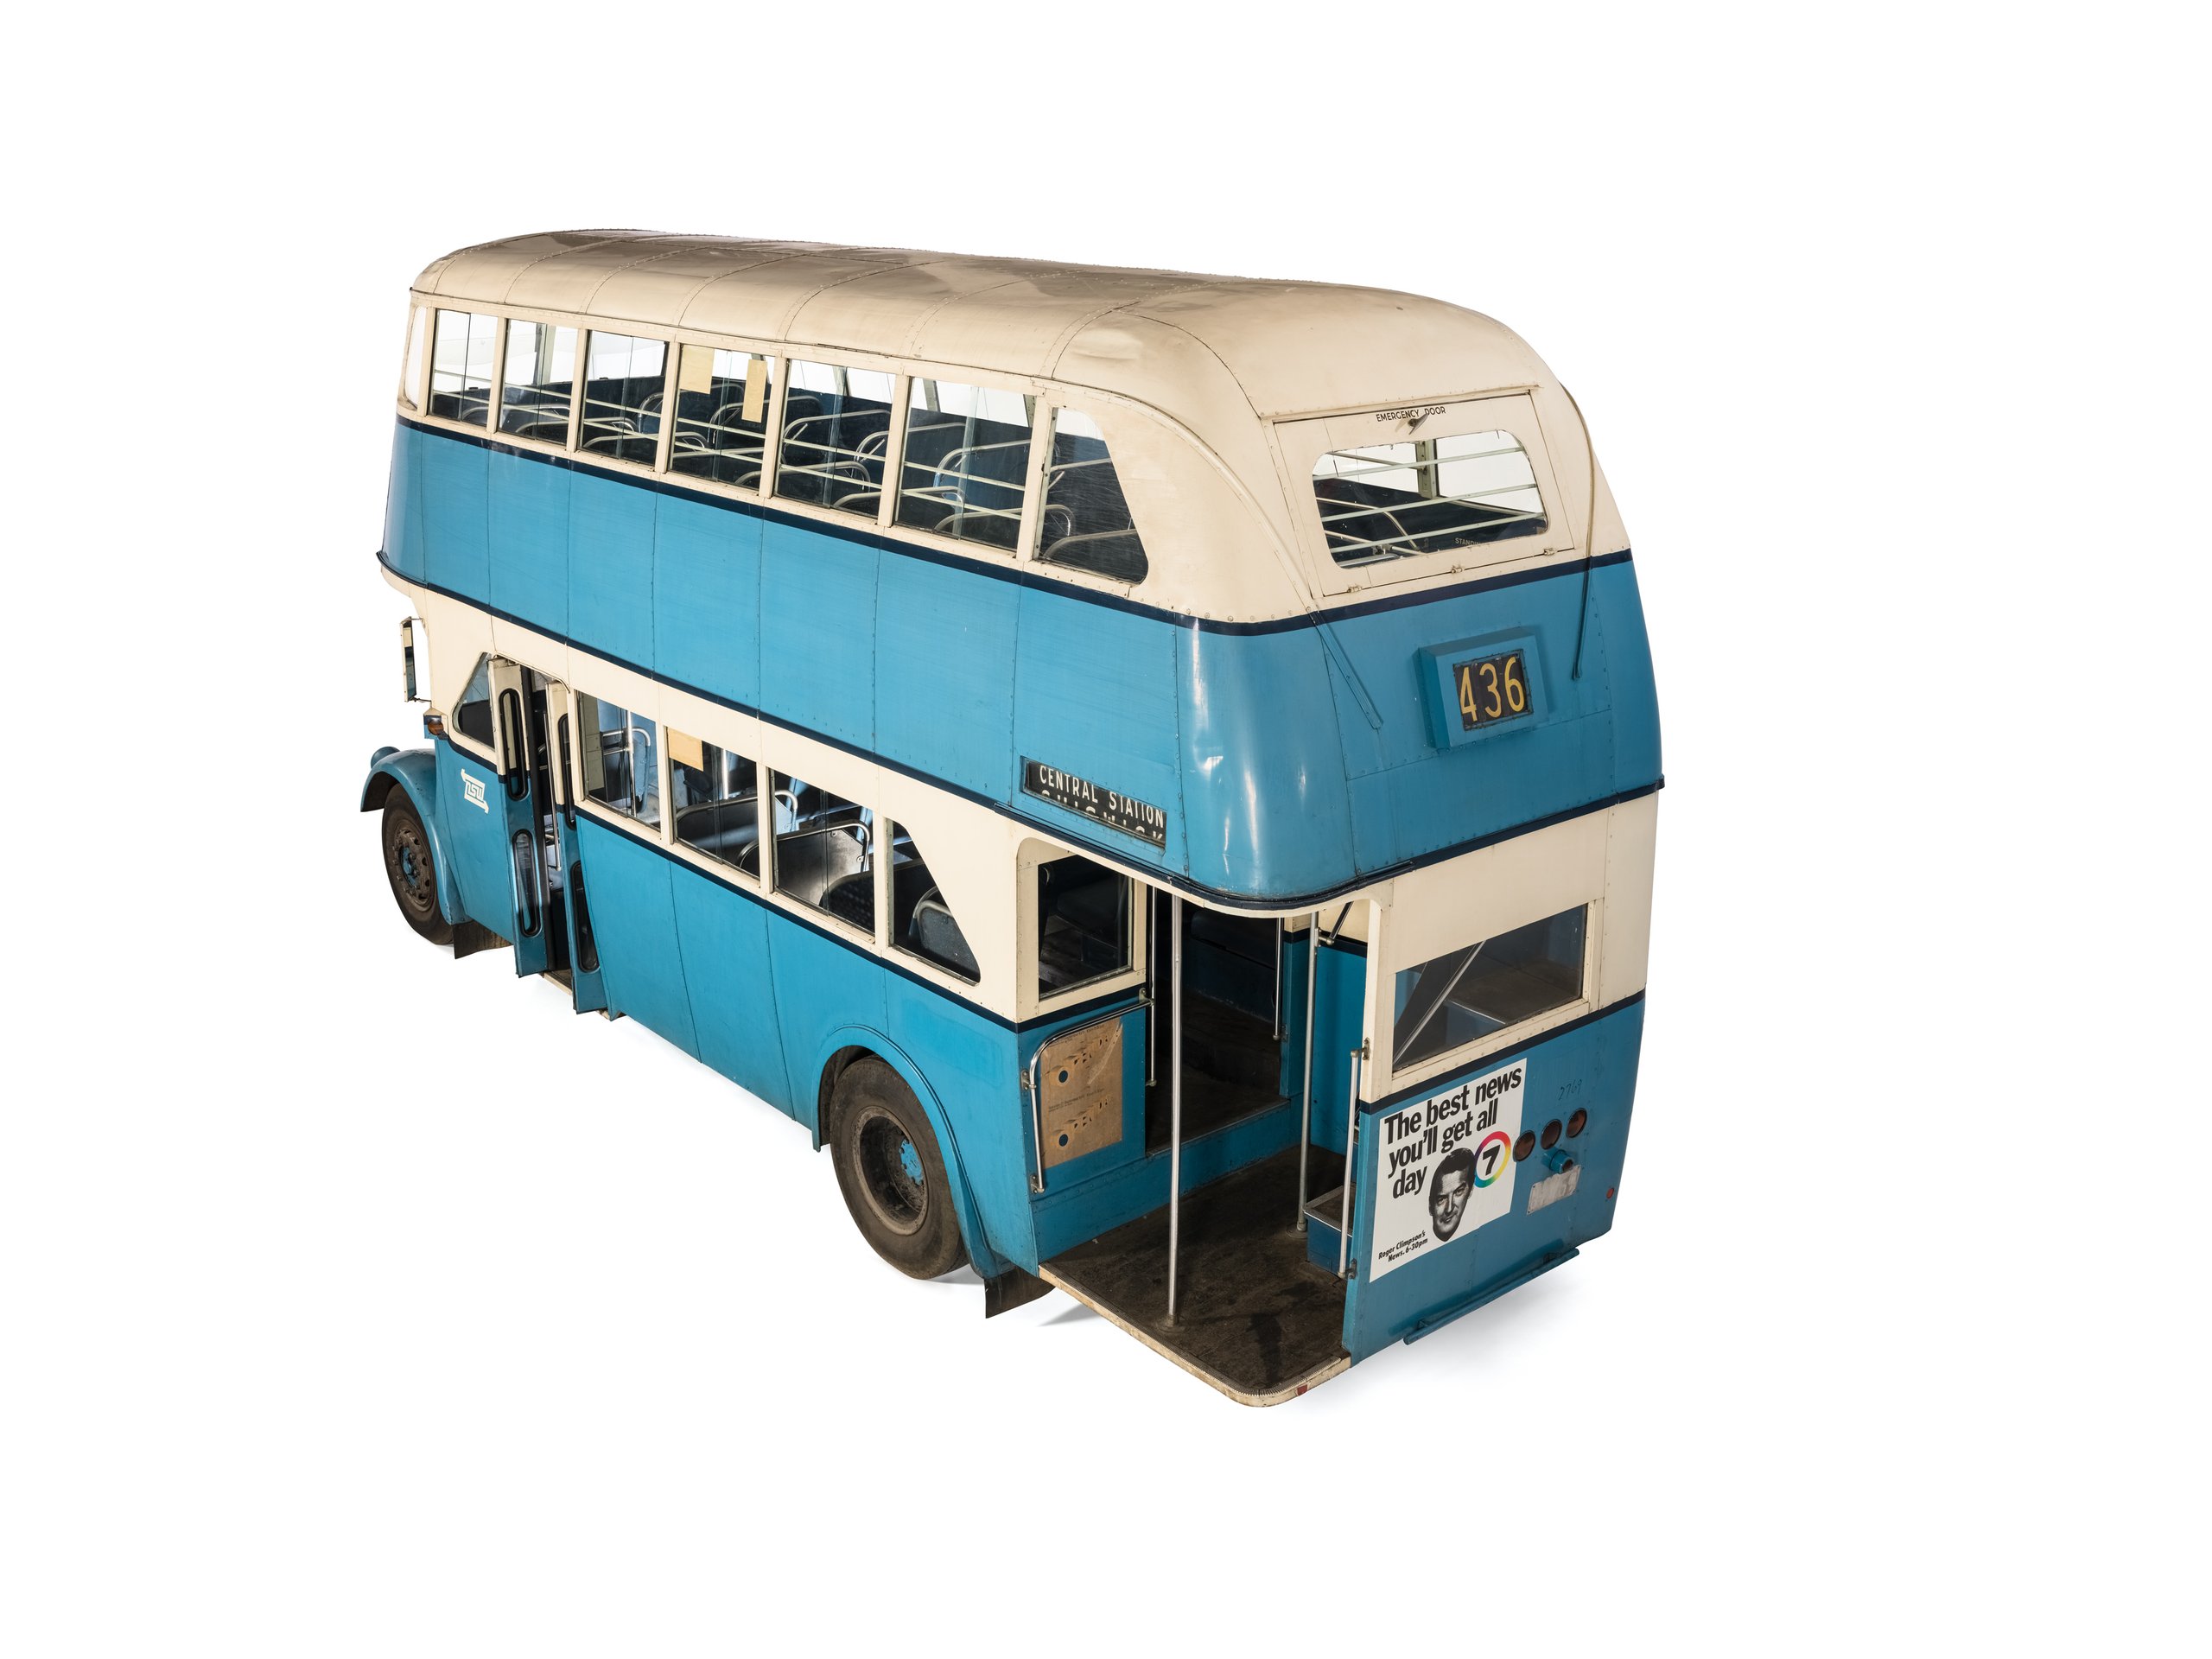 Leyland Titan double-deck bus